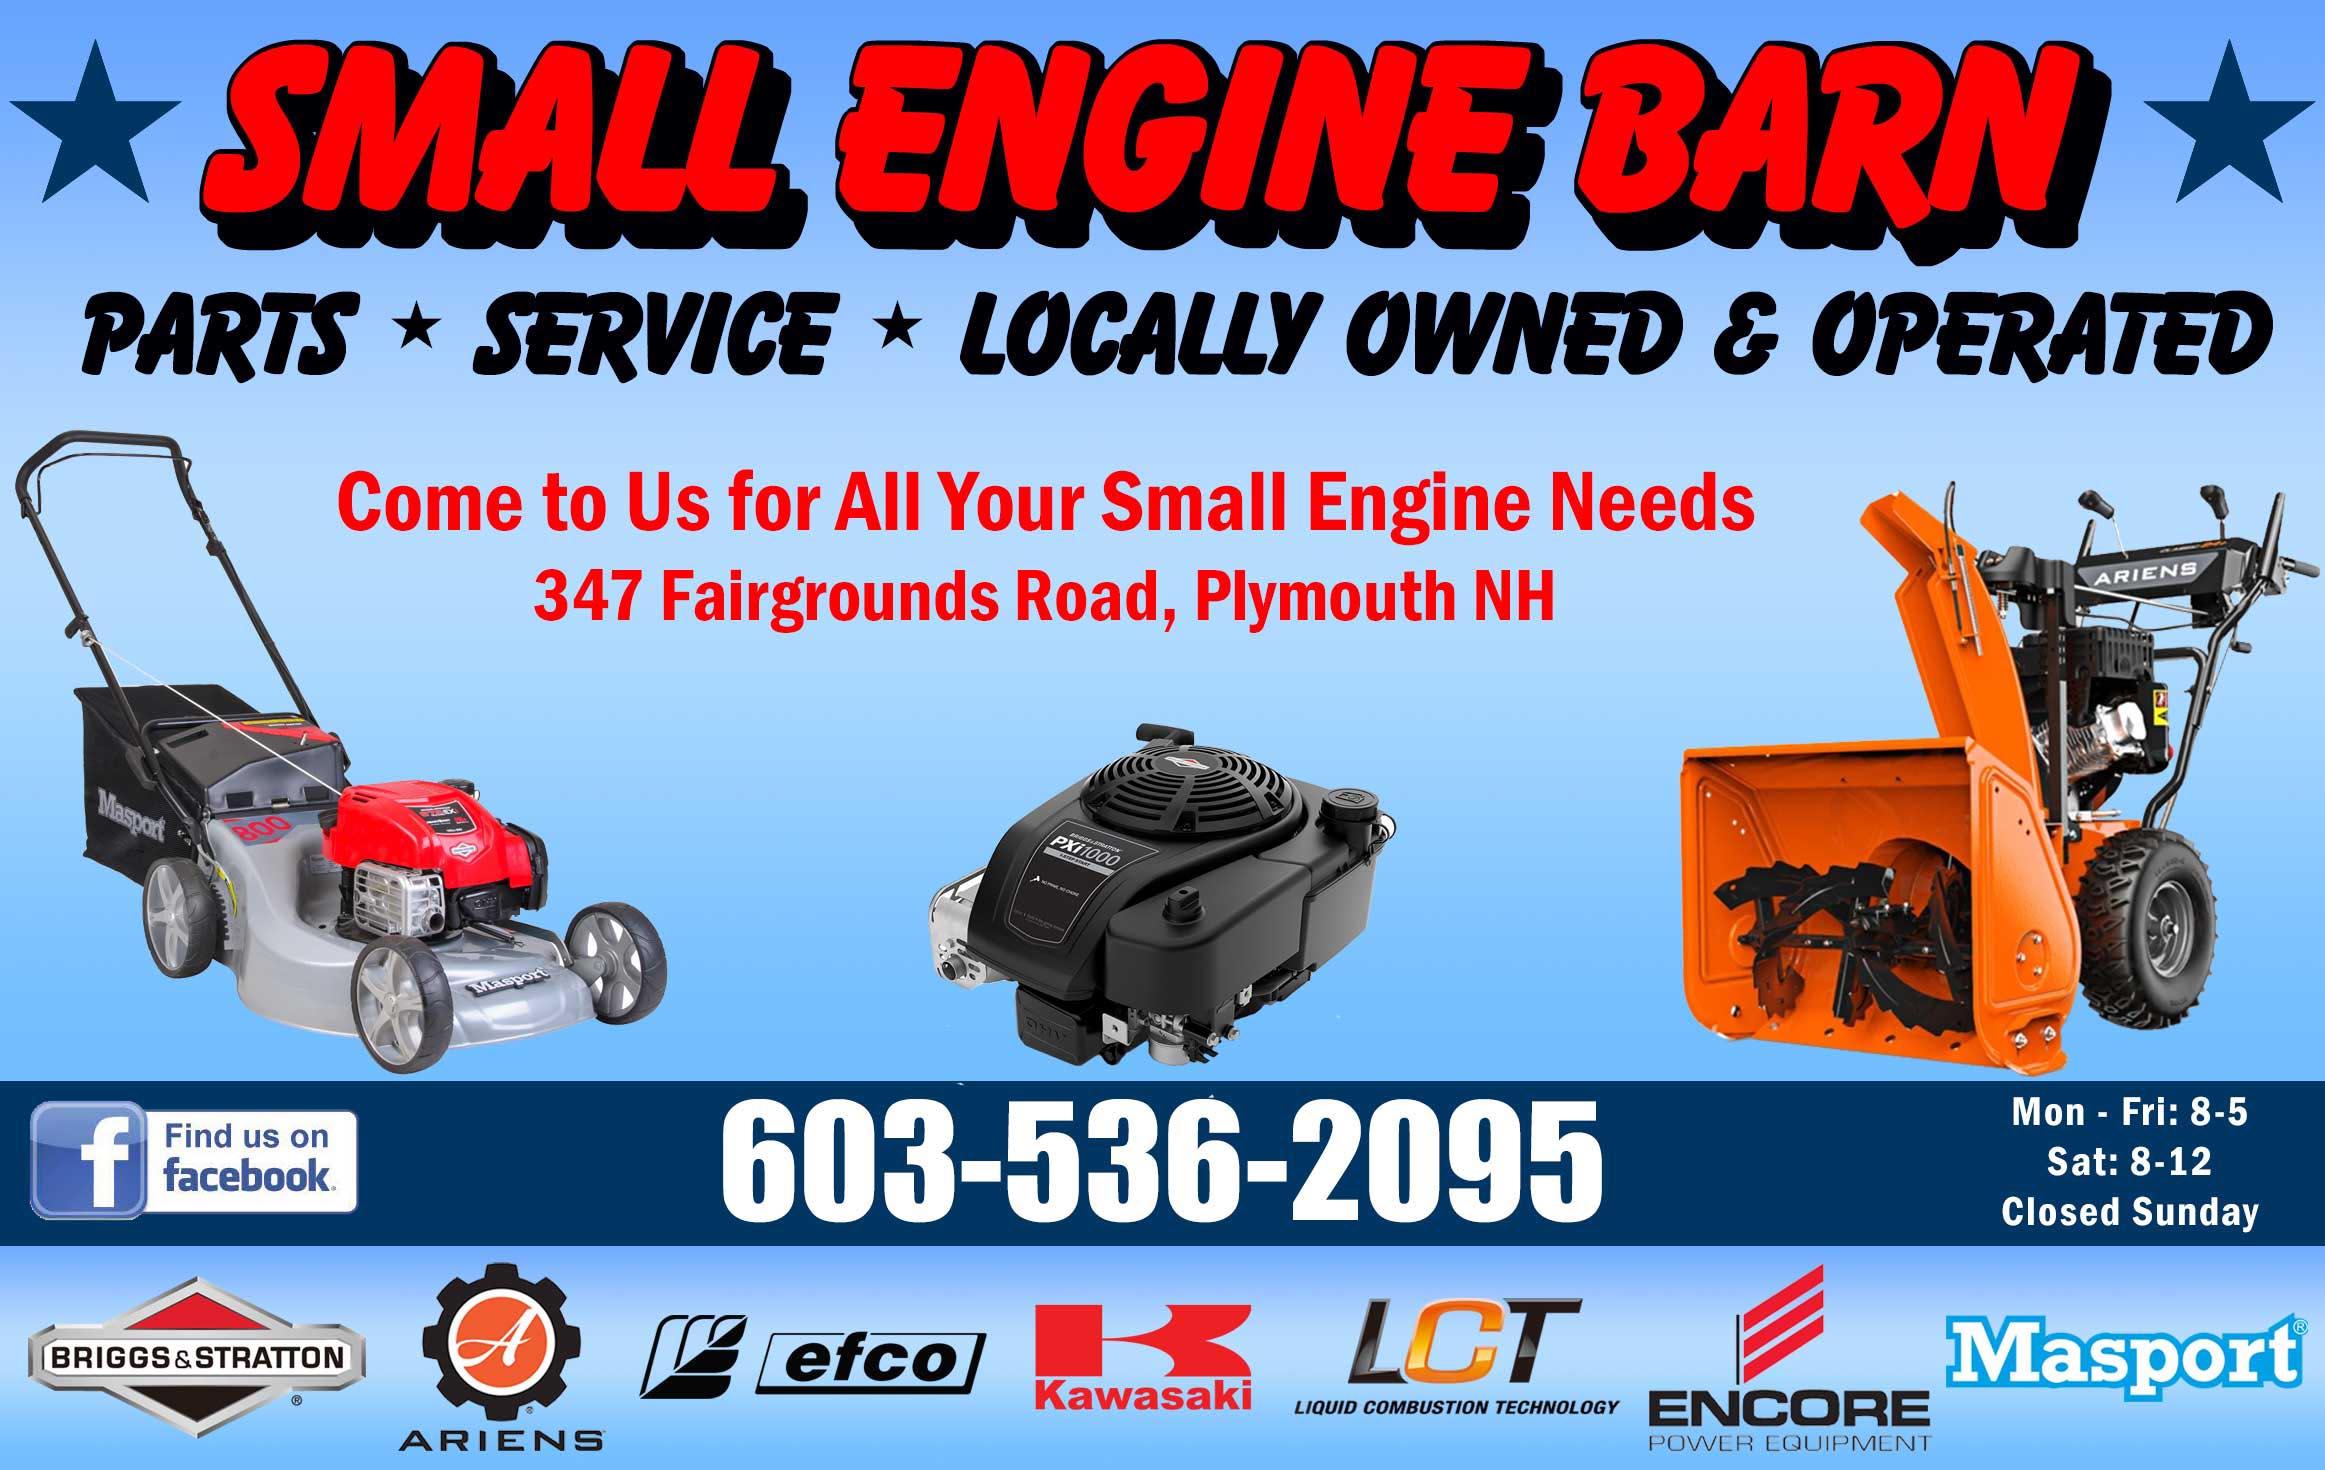 Small Engine Barn